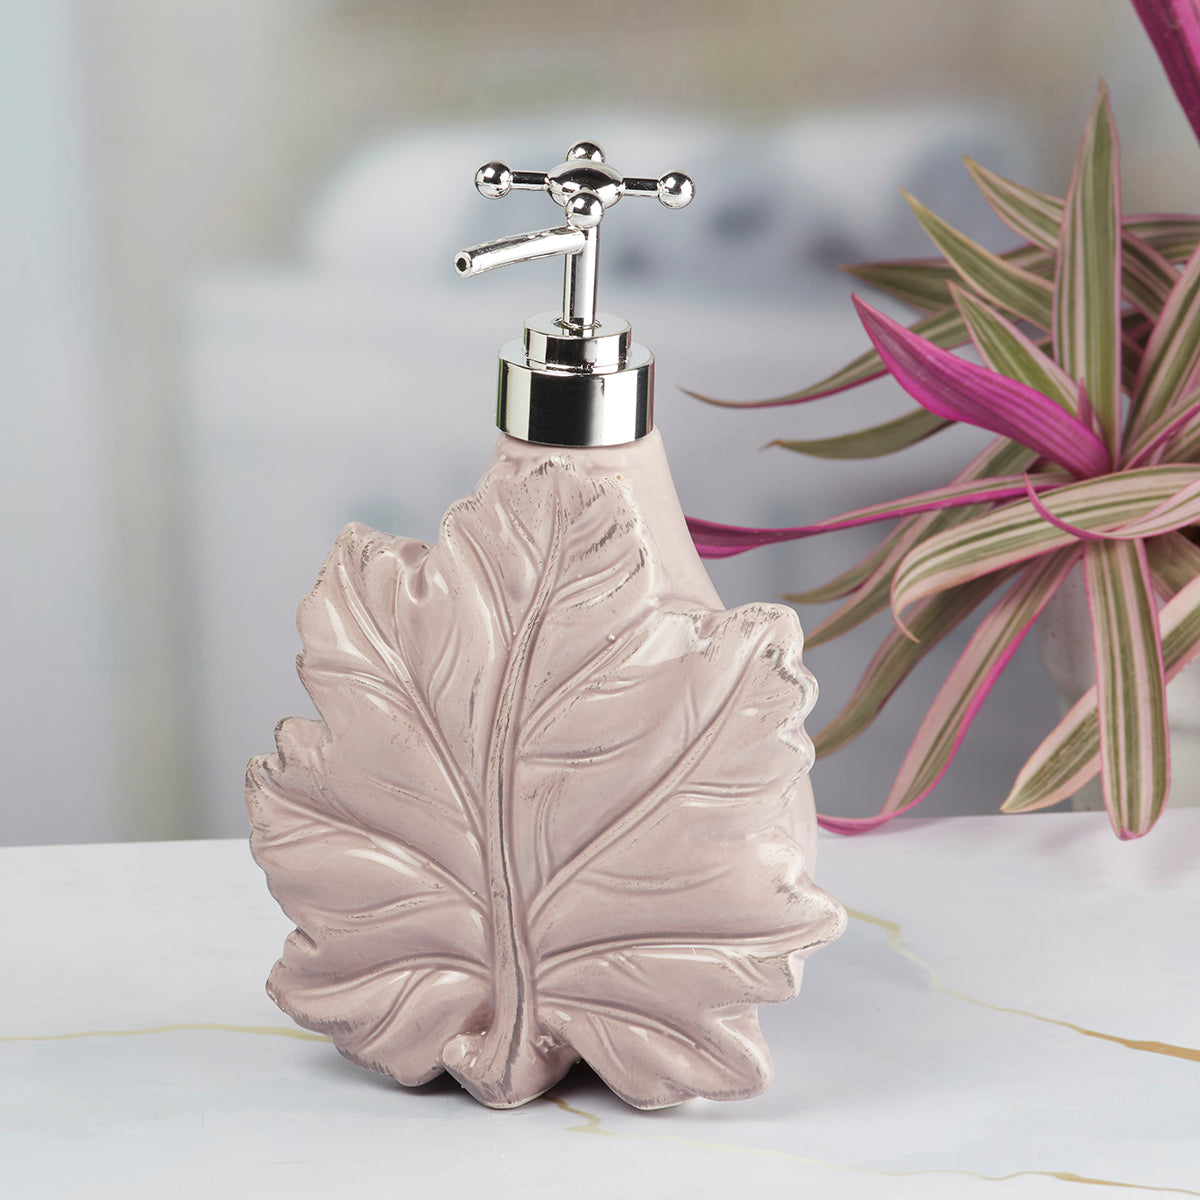 Ceramic Soap Dispenser Pump for Bathroom for Bath Gel, Lotion, Shampoo (8636)